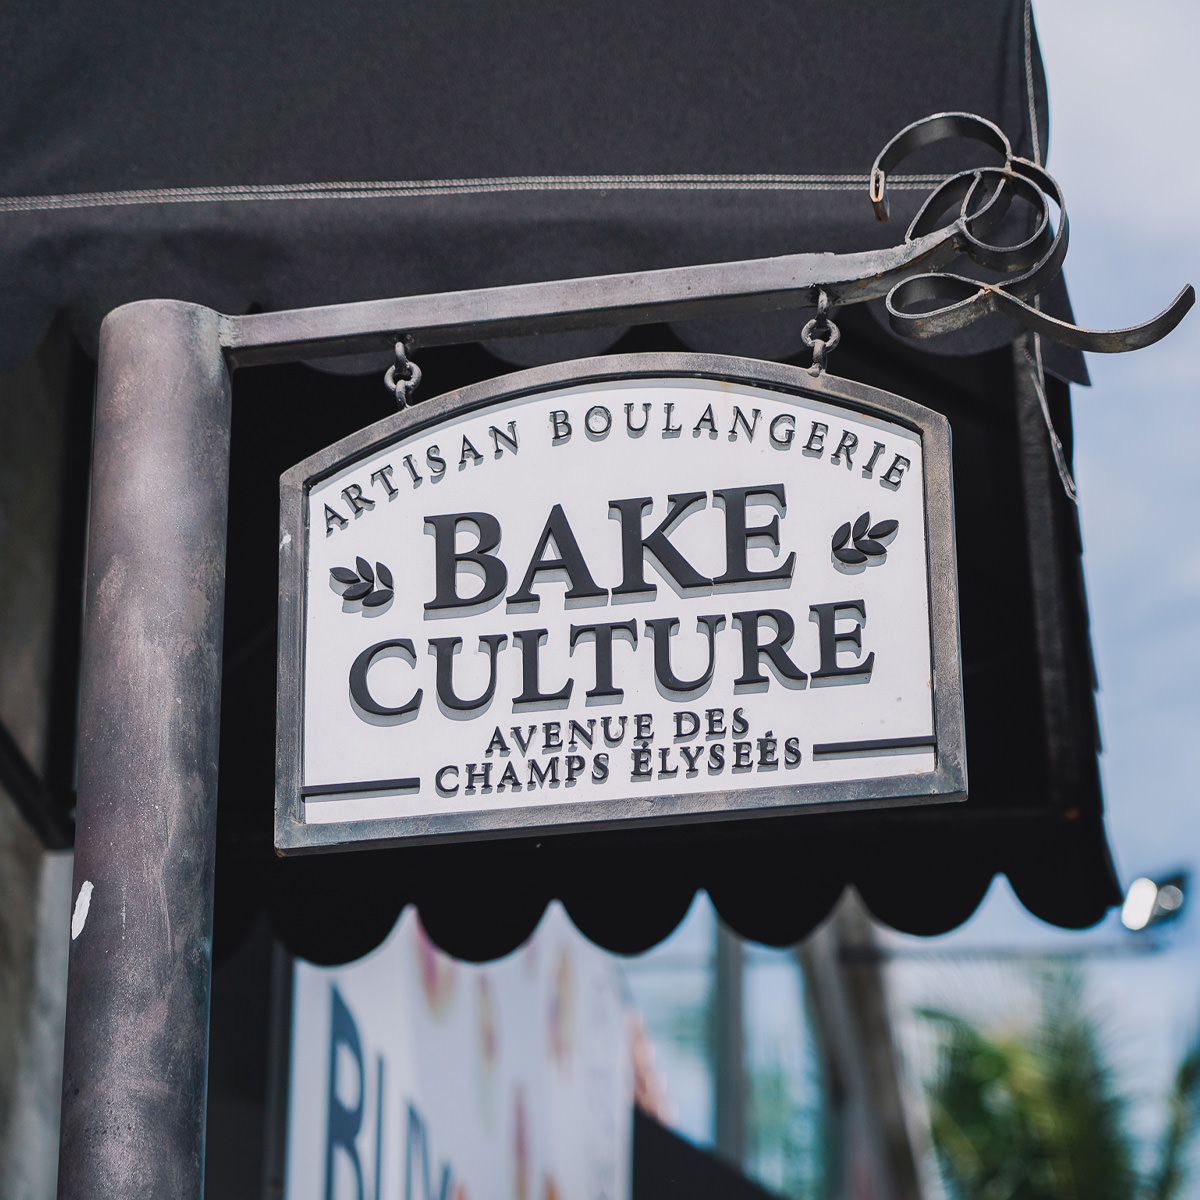 31 Bake Culture 2